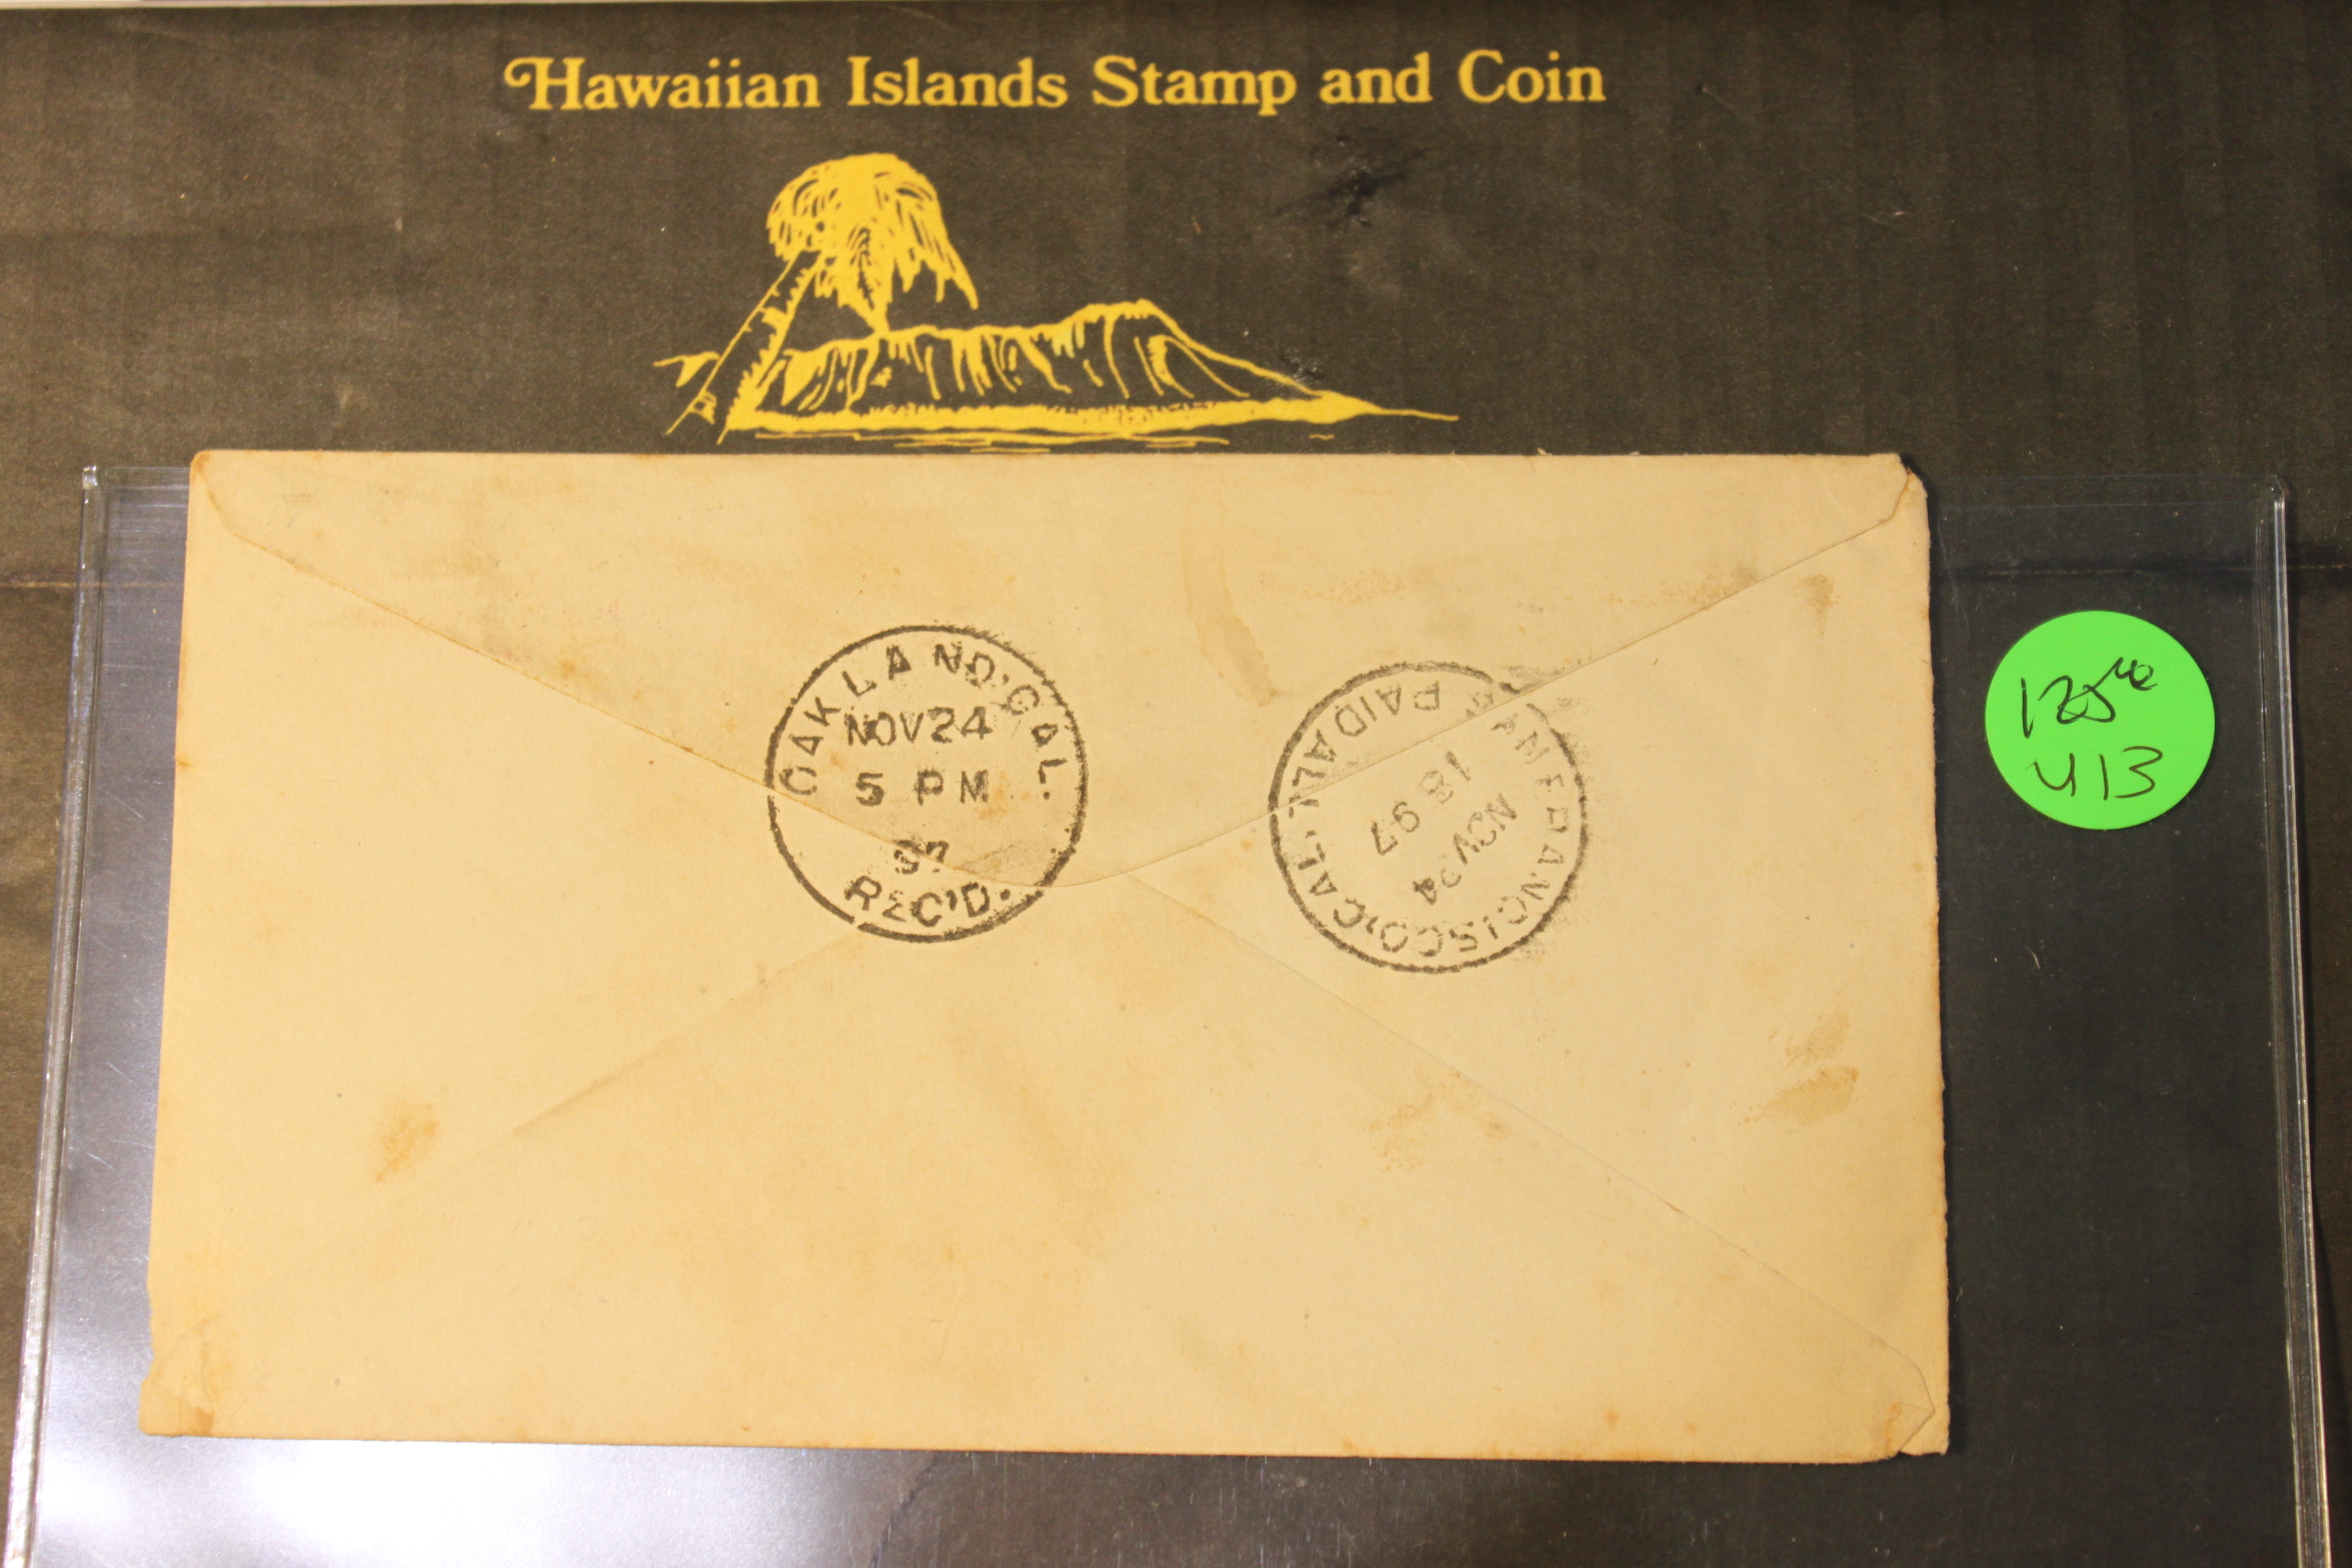 Hawaii Stamp and Coin Dealers Association Show - Honolulu, Hawaii